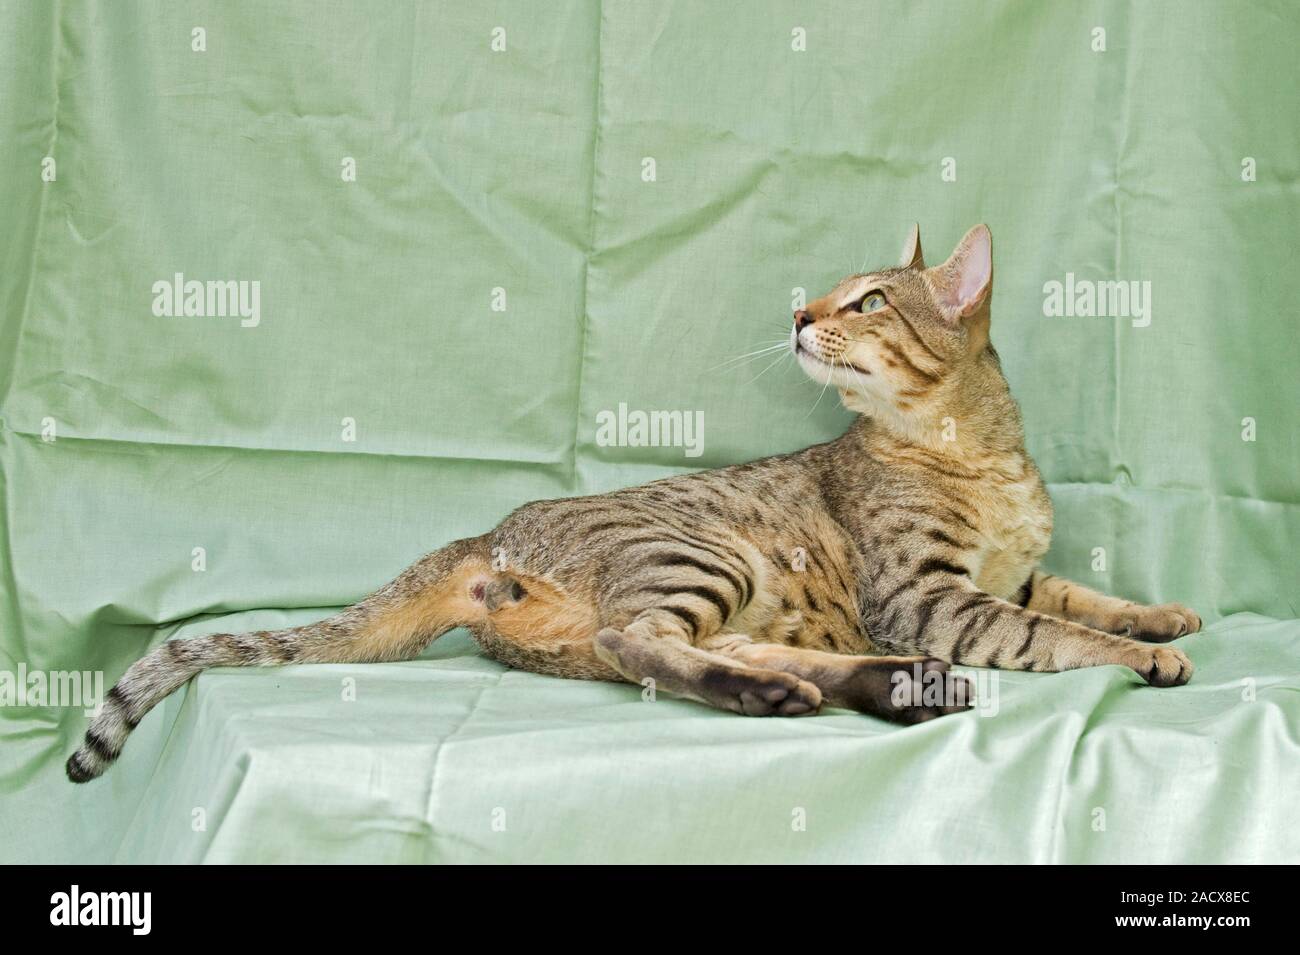 Savannah Katze (Felis catus X Leptailurus serval). Hybrid Hauskatze und Serval. Stockfoto